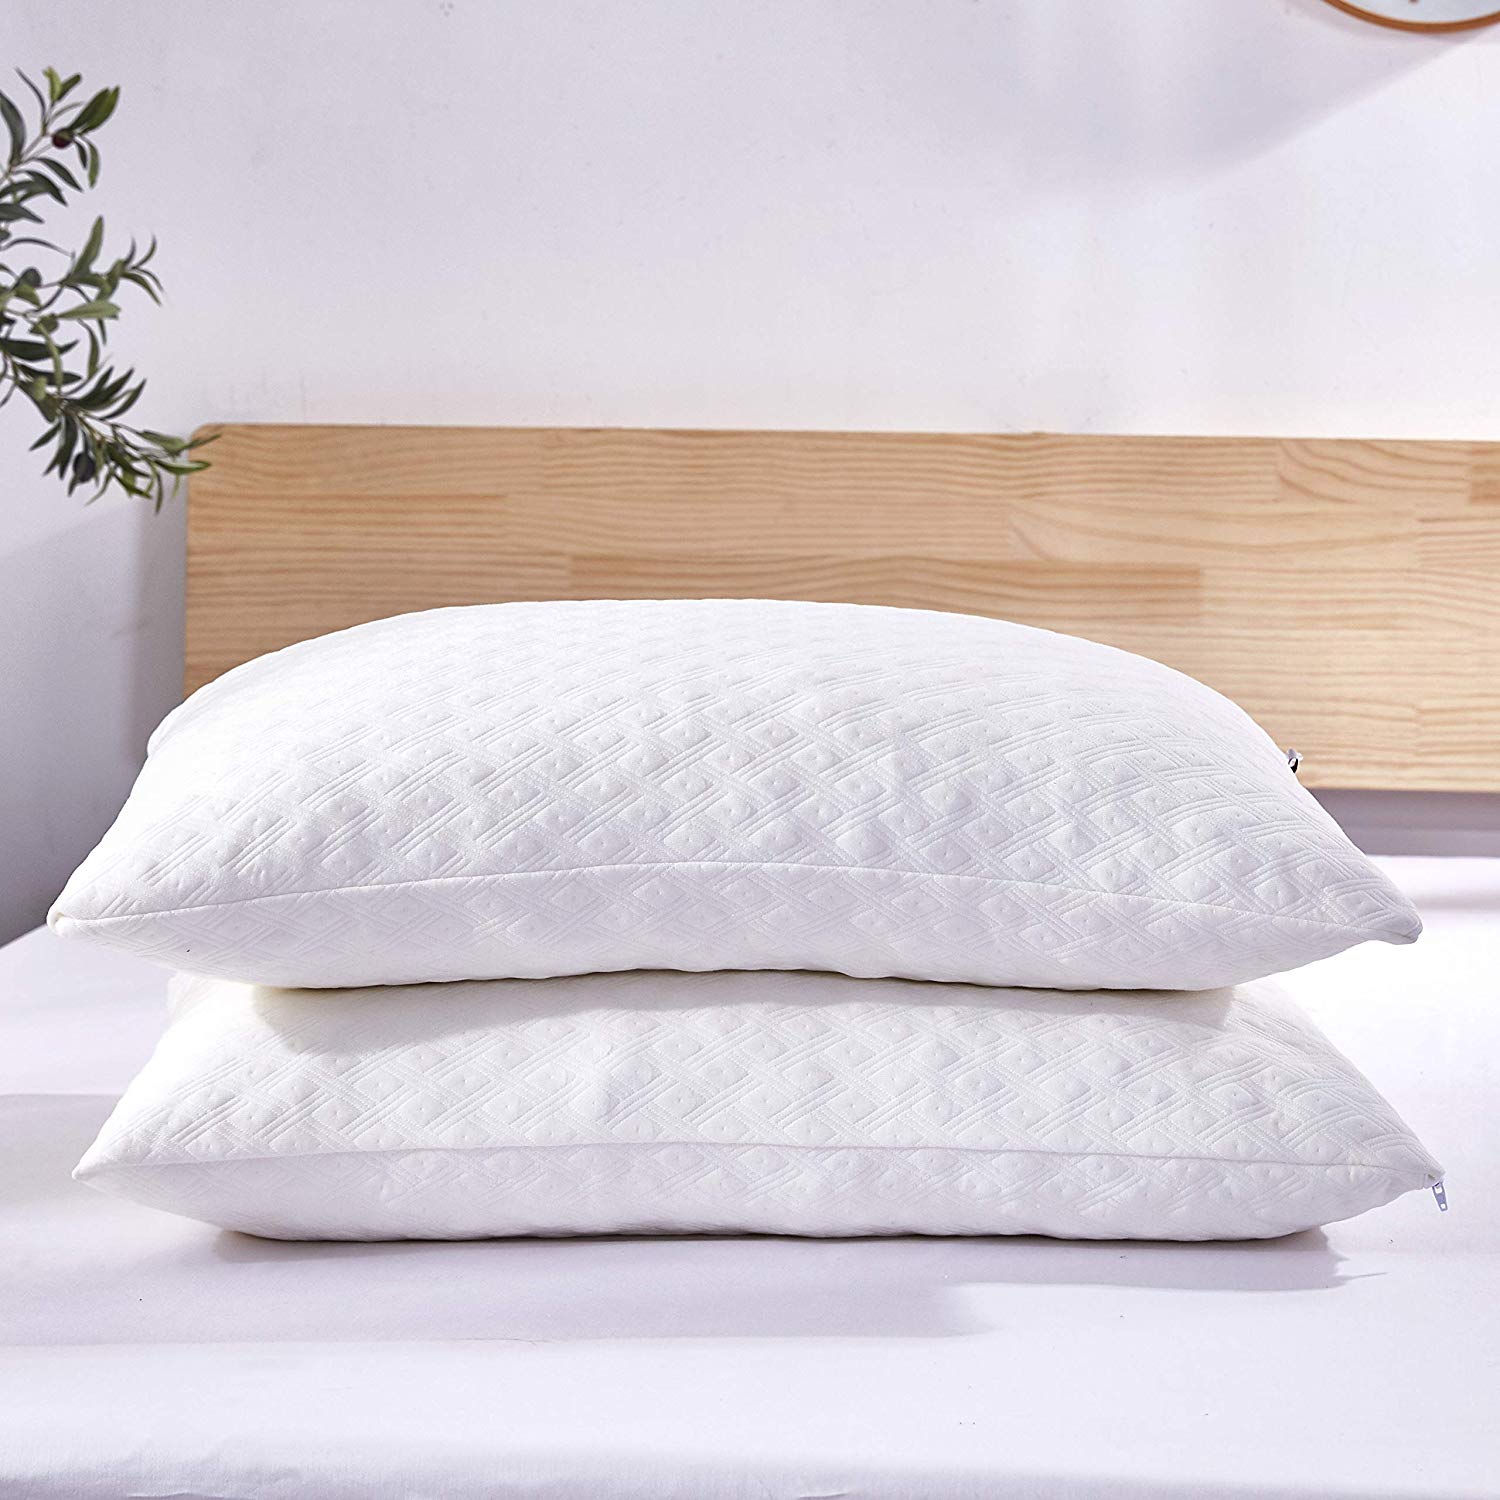 Dreaming Wapiti Pillows for Sleeping